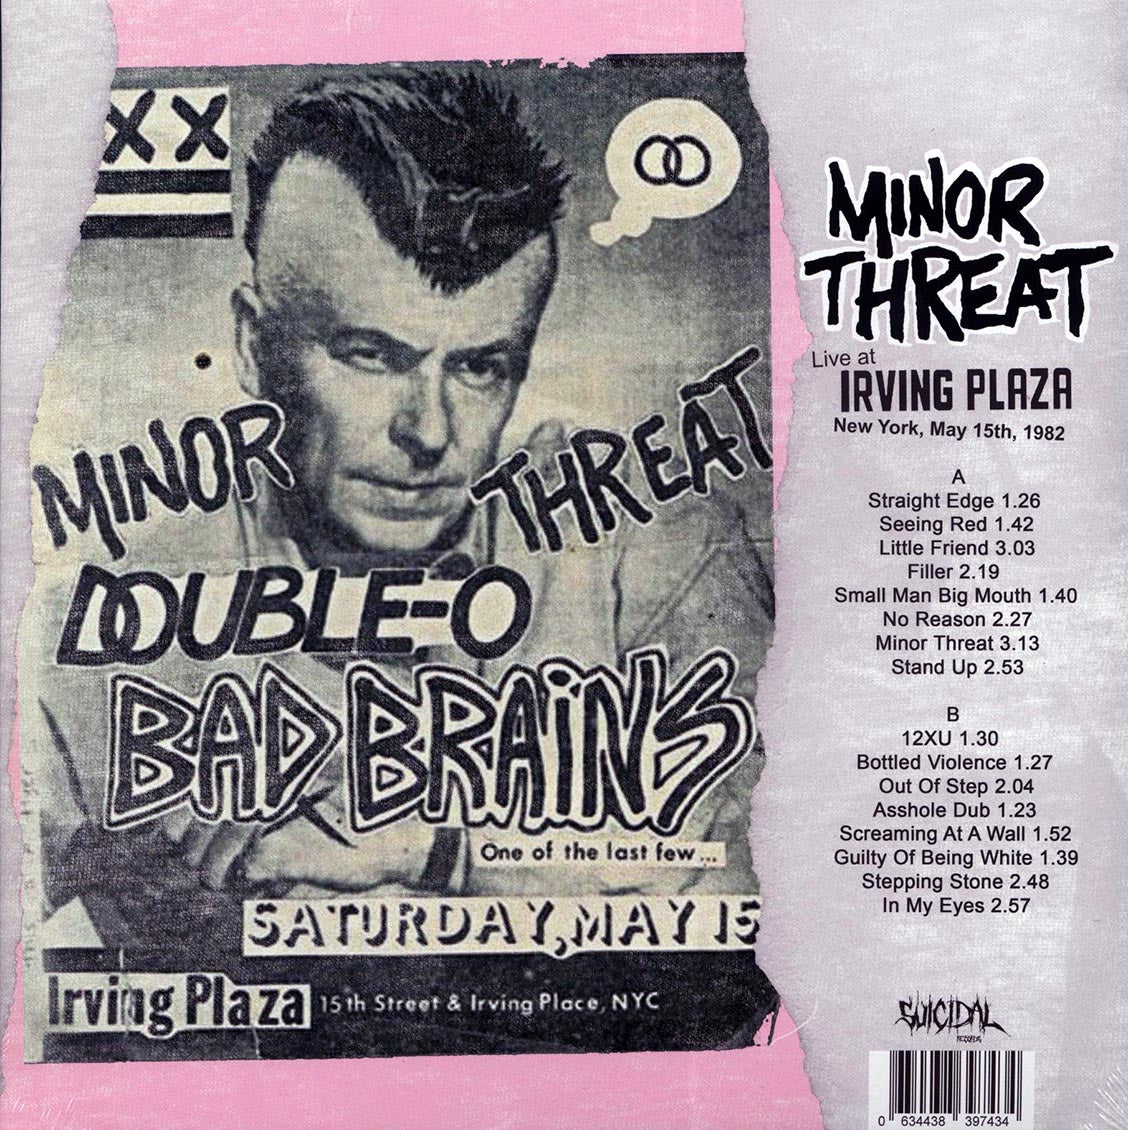 Minor Threat - Live At Irving Plaza New York, May 15th, 1982